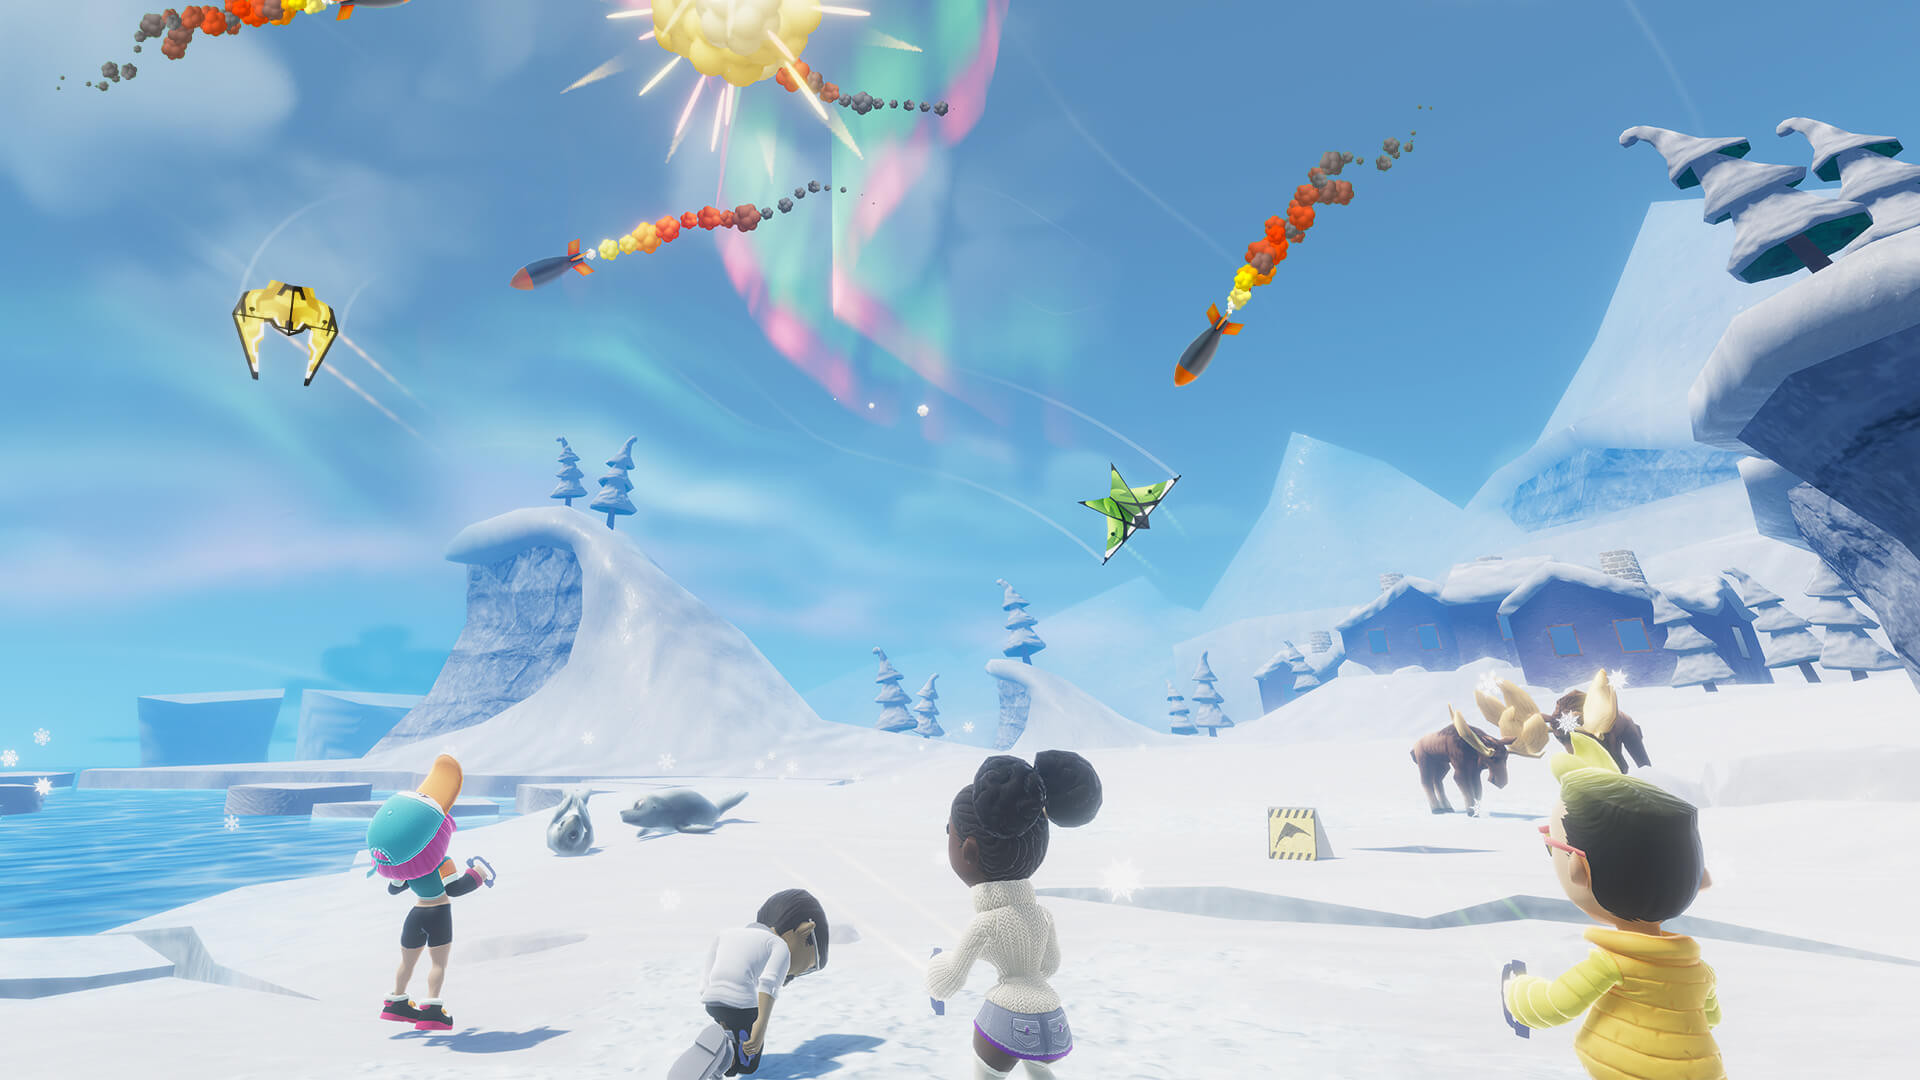 Stunt Kite Party (Steam key / Region Free)